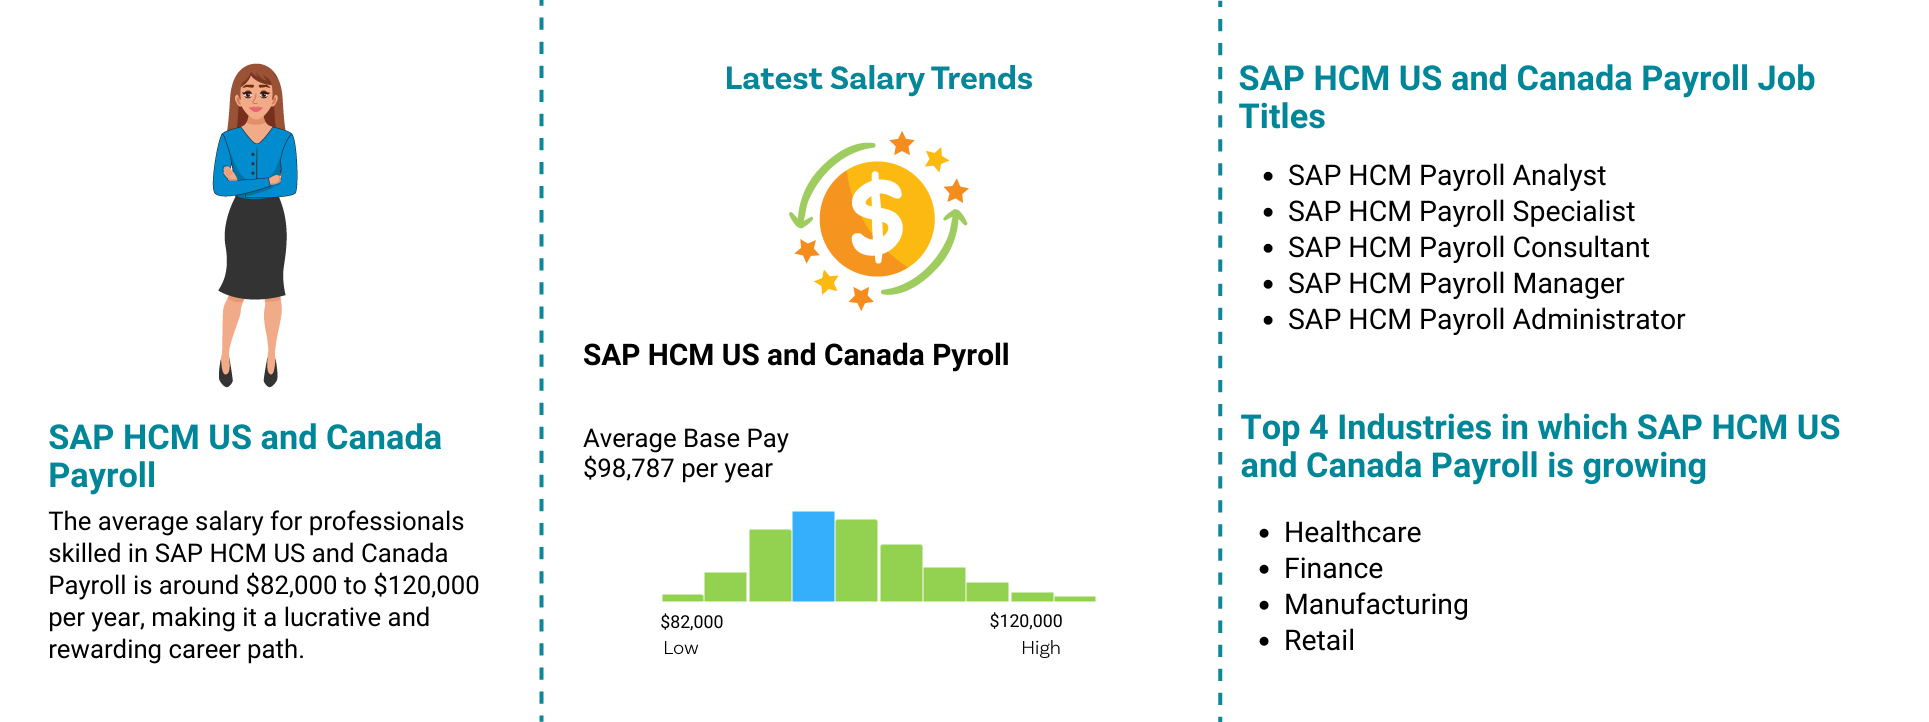 SAP HCM US and Canada Payroll